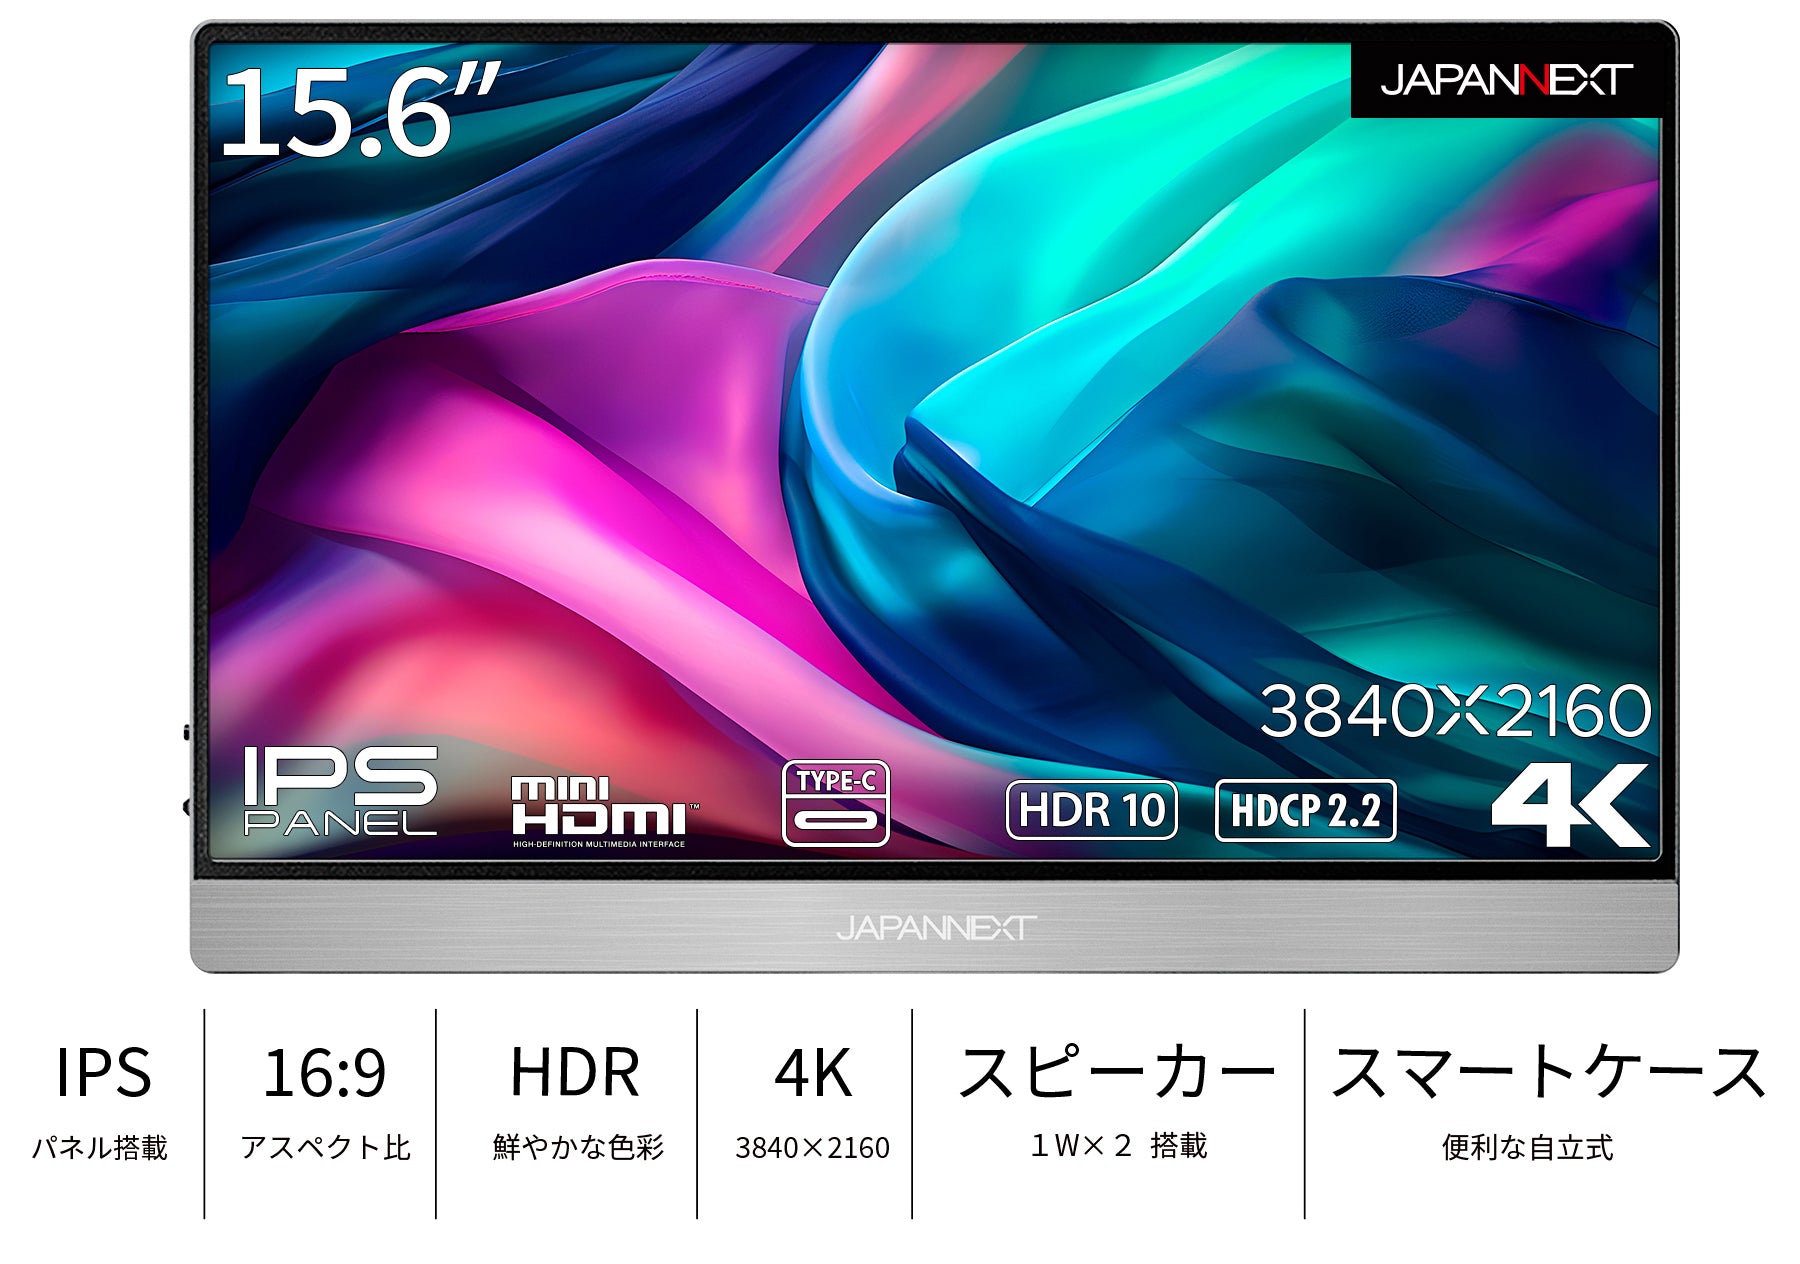 JAPANNEXT 15.6インチIPSパネル 4K(3840x2160)解像度 モバイル 